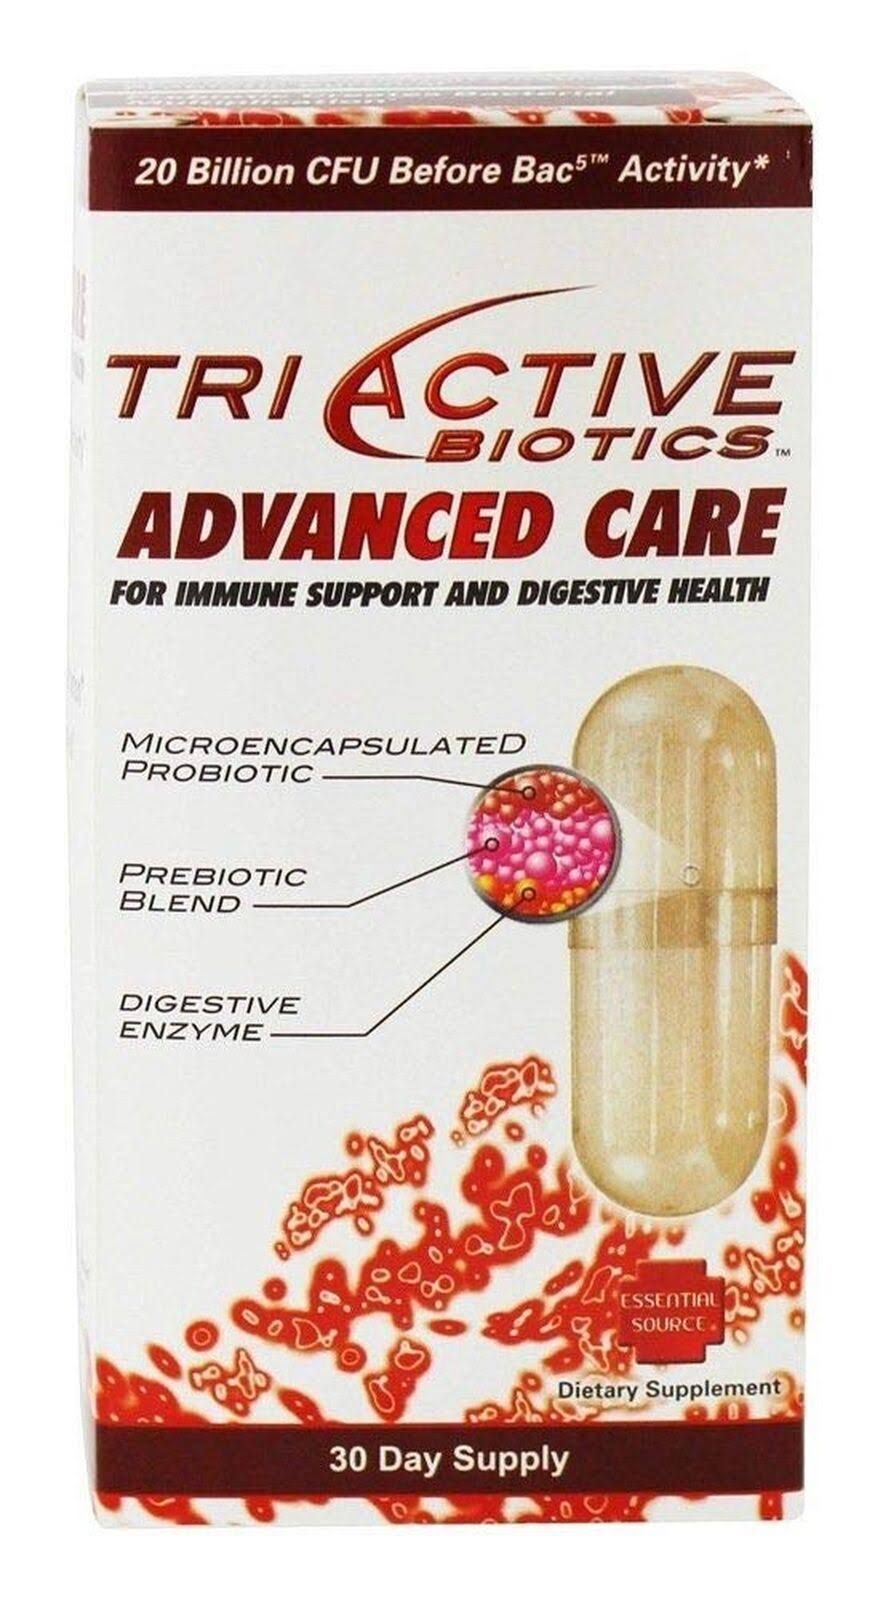 Essential Source TriActive Biotics Advanced Care Colon Cleanse Capsules - x30